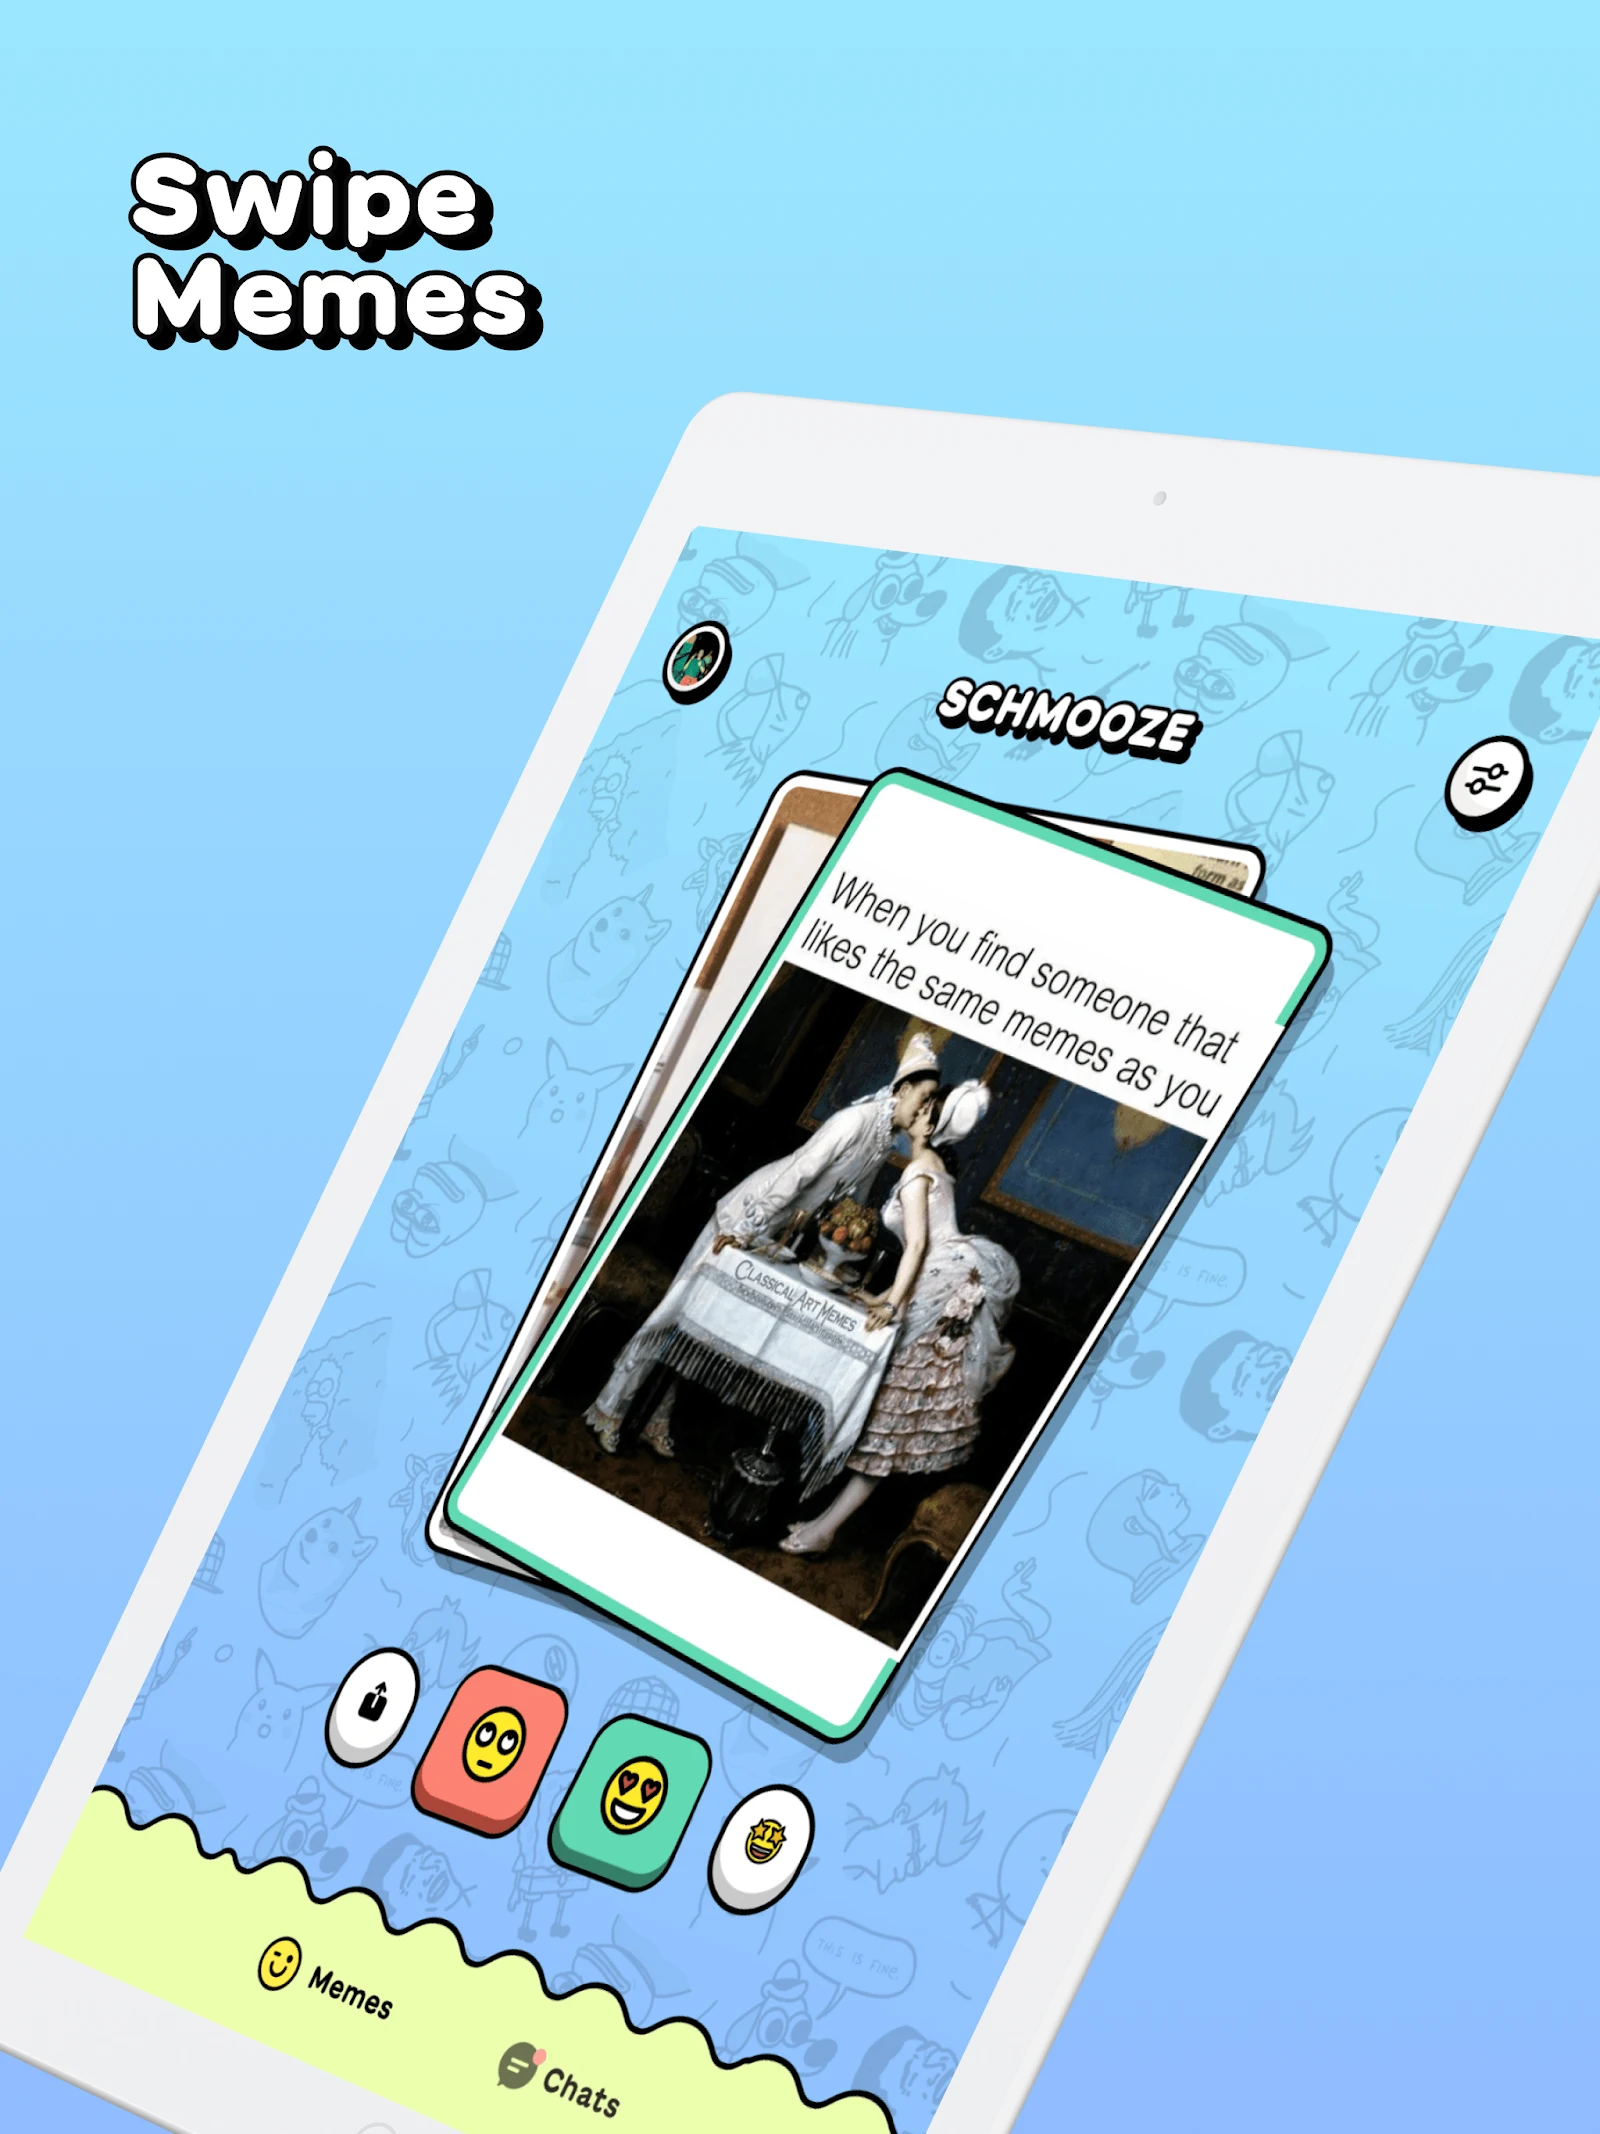 Memes meets Tinder, find a match based on memes